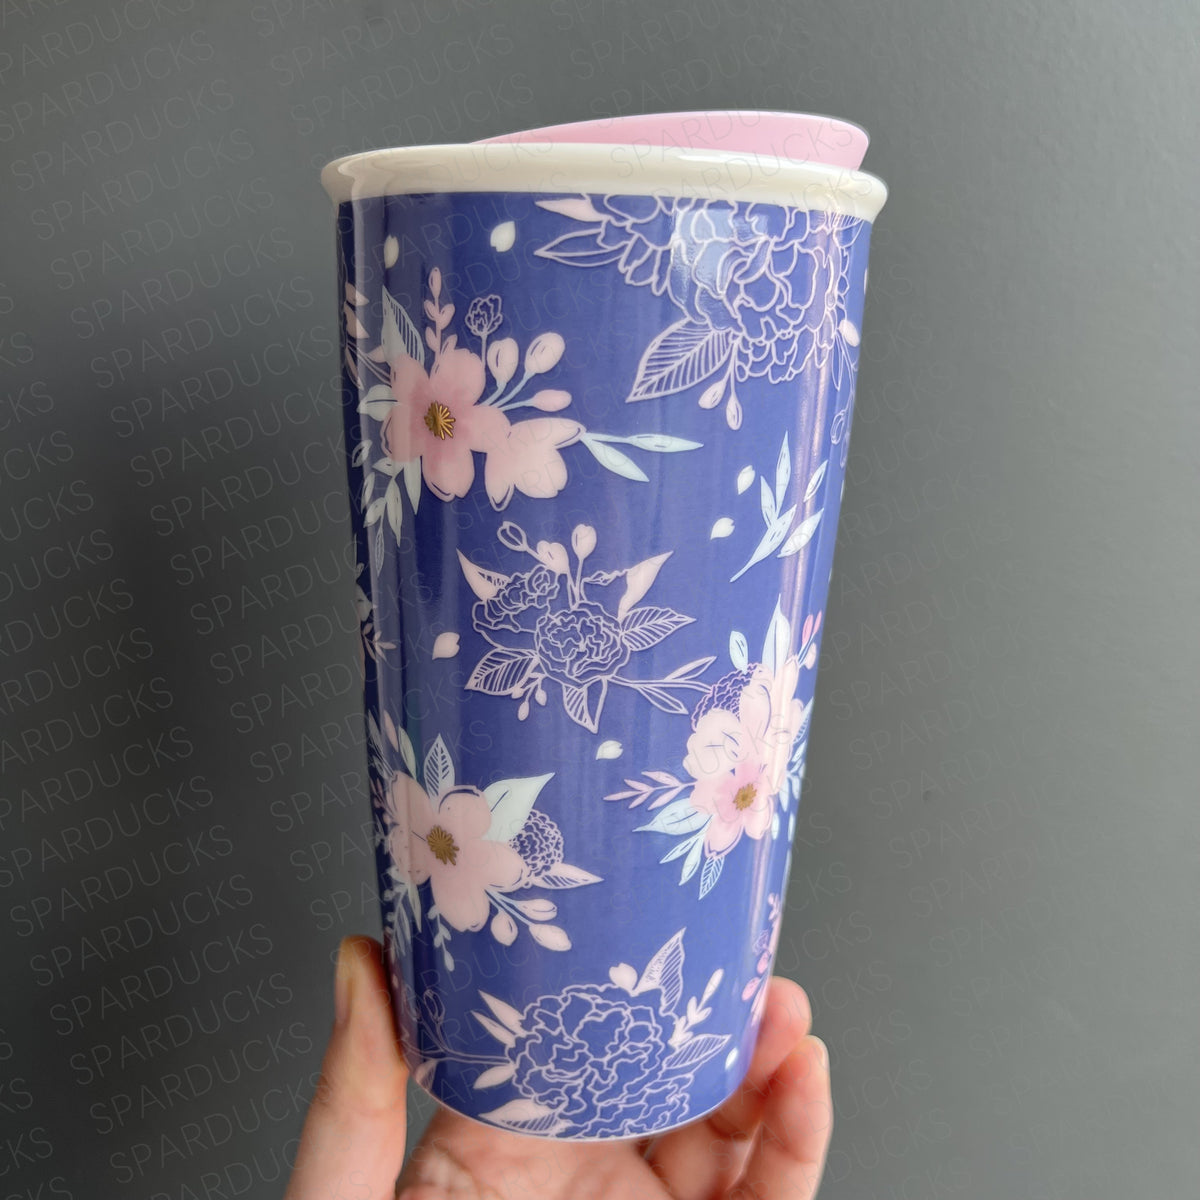 12oz 2019 Spring Flower Double Wall Ceramic Tumbler